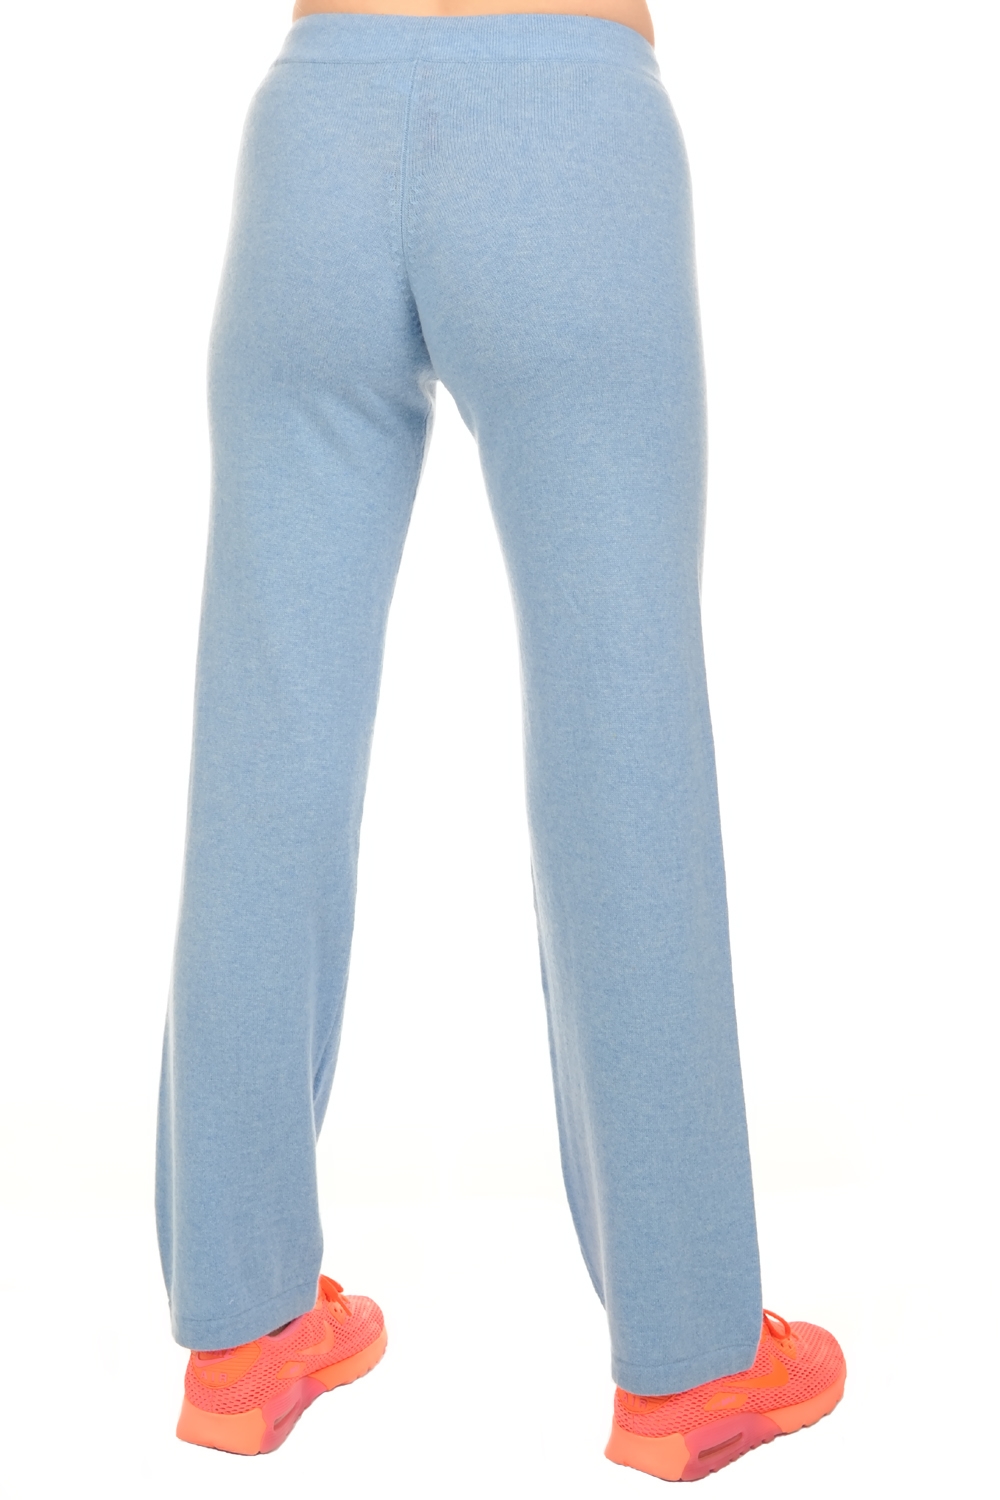 Cachemire pantalon legging femme malice bleu azur chine 2xl